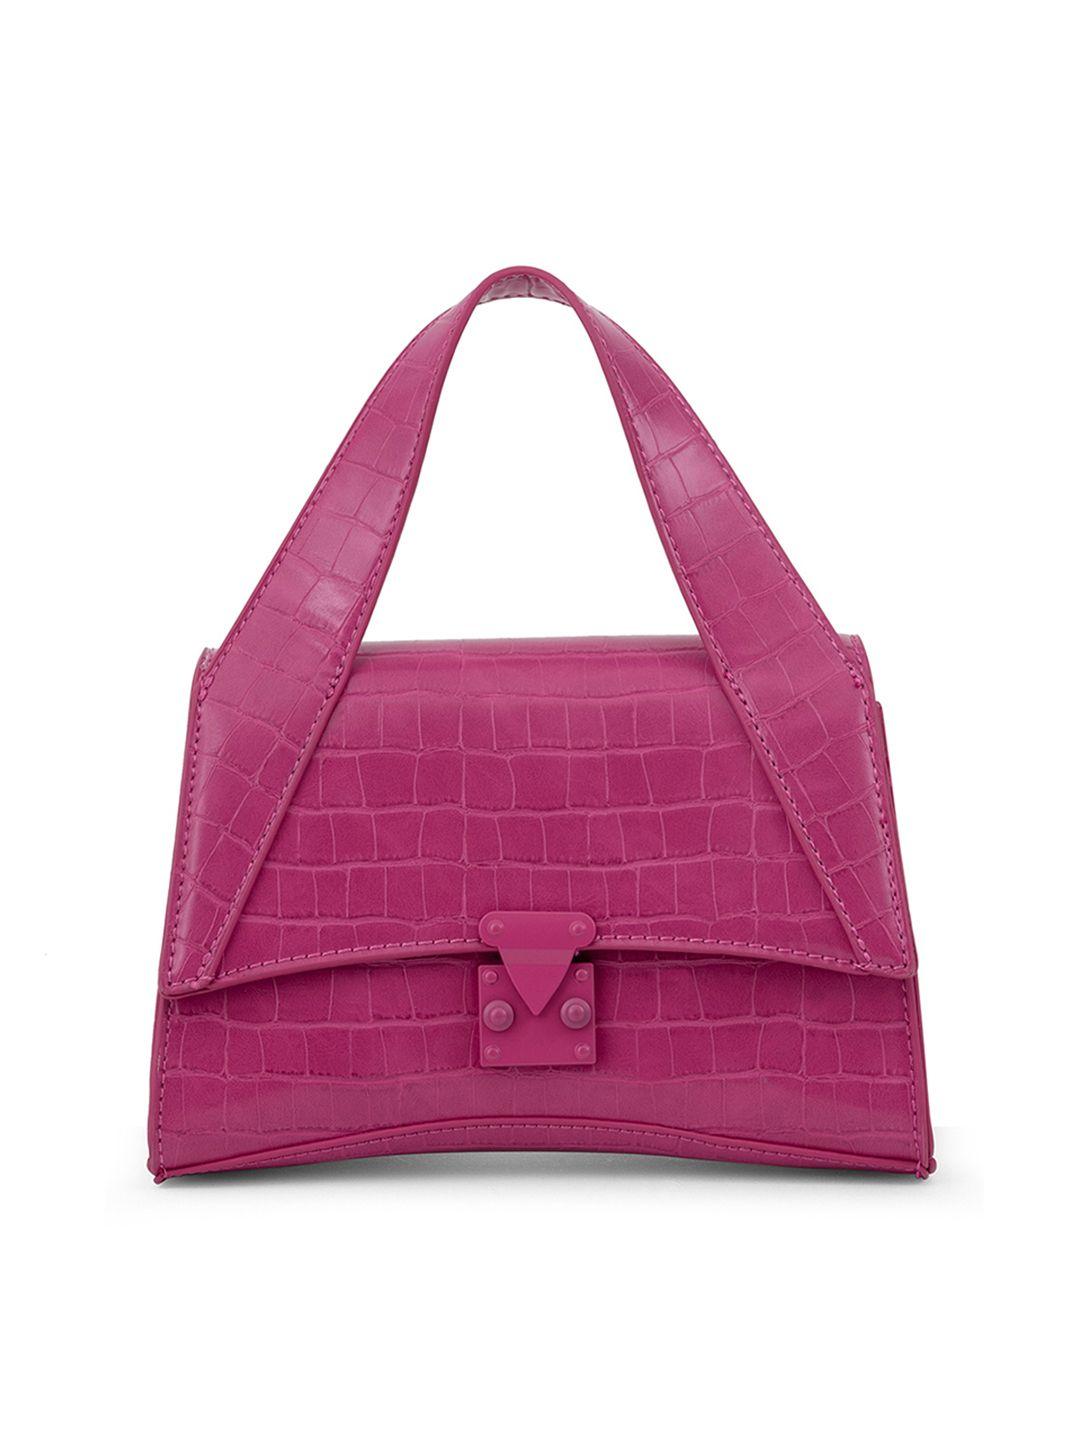 miraggio pink croc-textured satchel bag with detachable sling strap